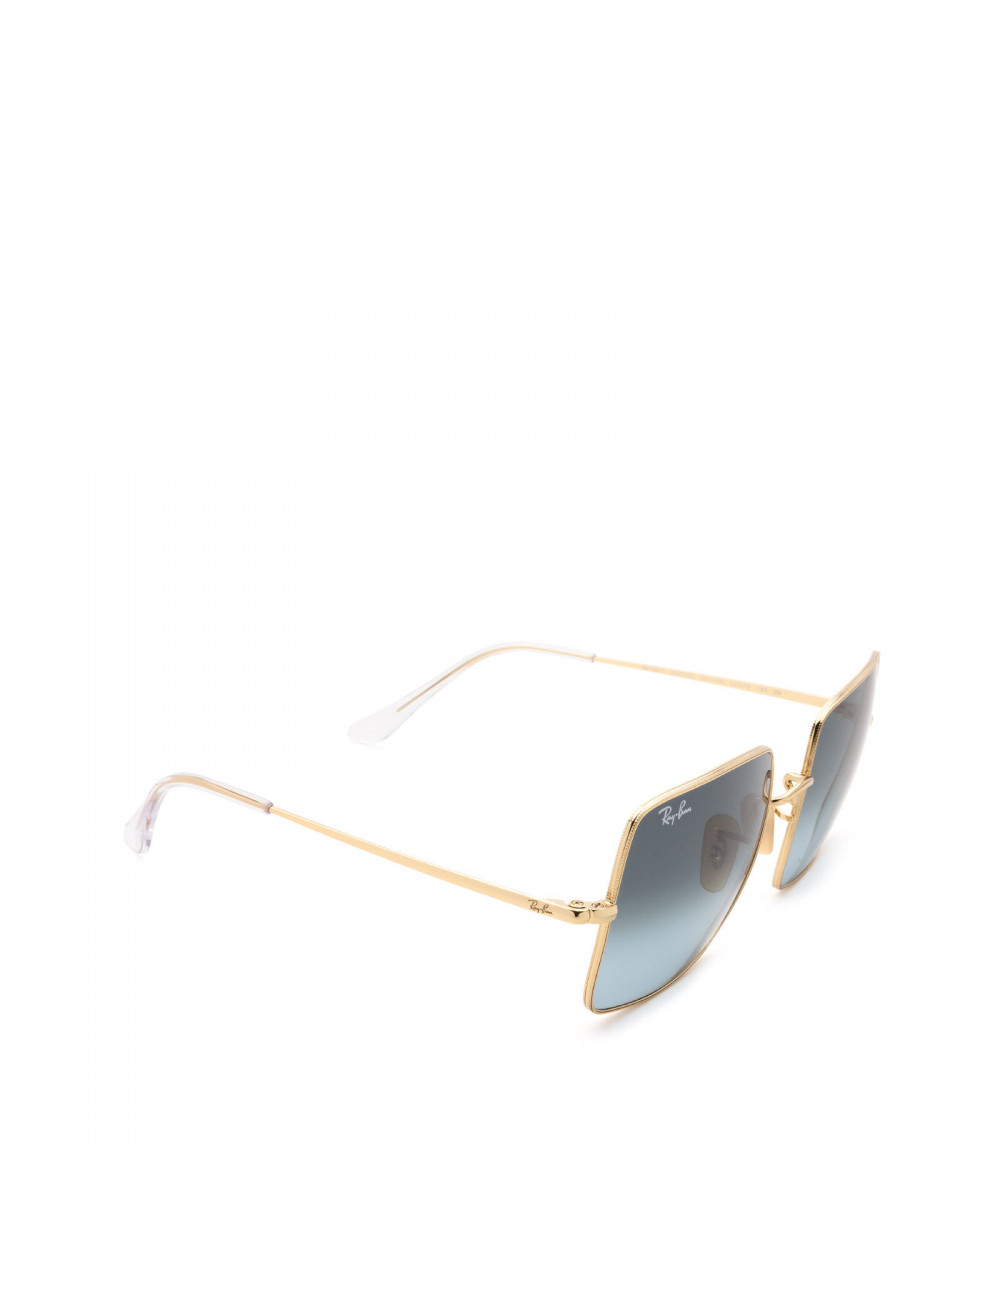 Ray Ban Green Tinted Square Sunglasses S35A5493 @ ₹6898-mncb.edu.vn